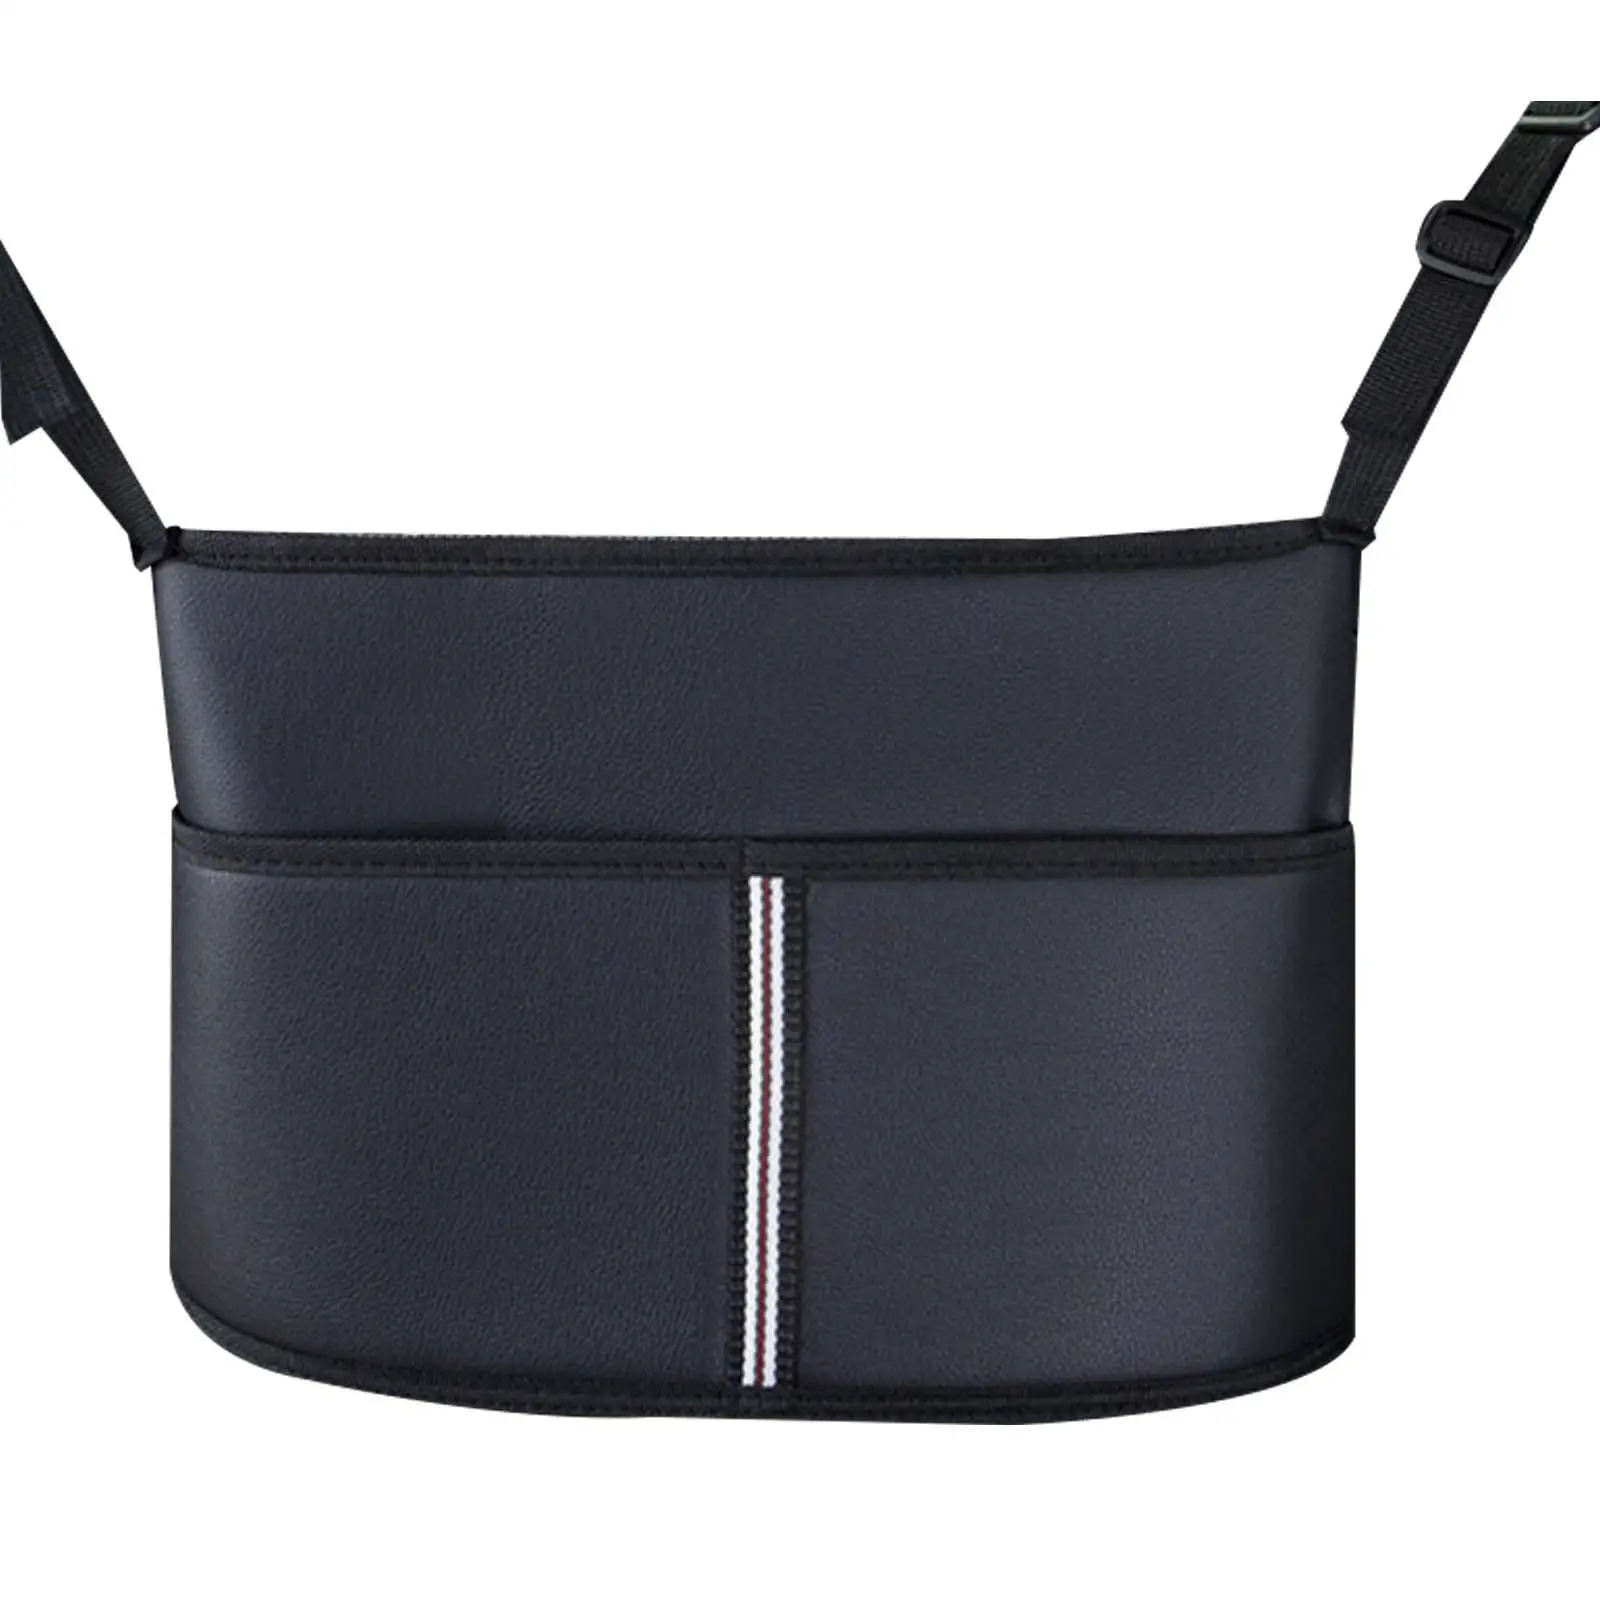 Car Purse Holder Between Seats Large Capacity Front Seat Handbag Pocket for Bags